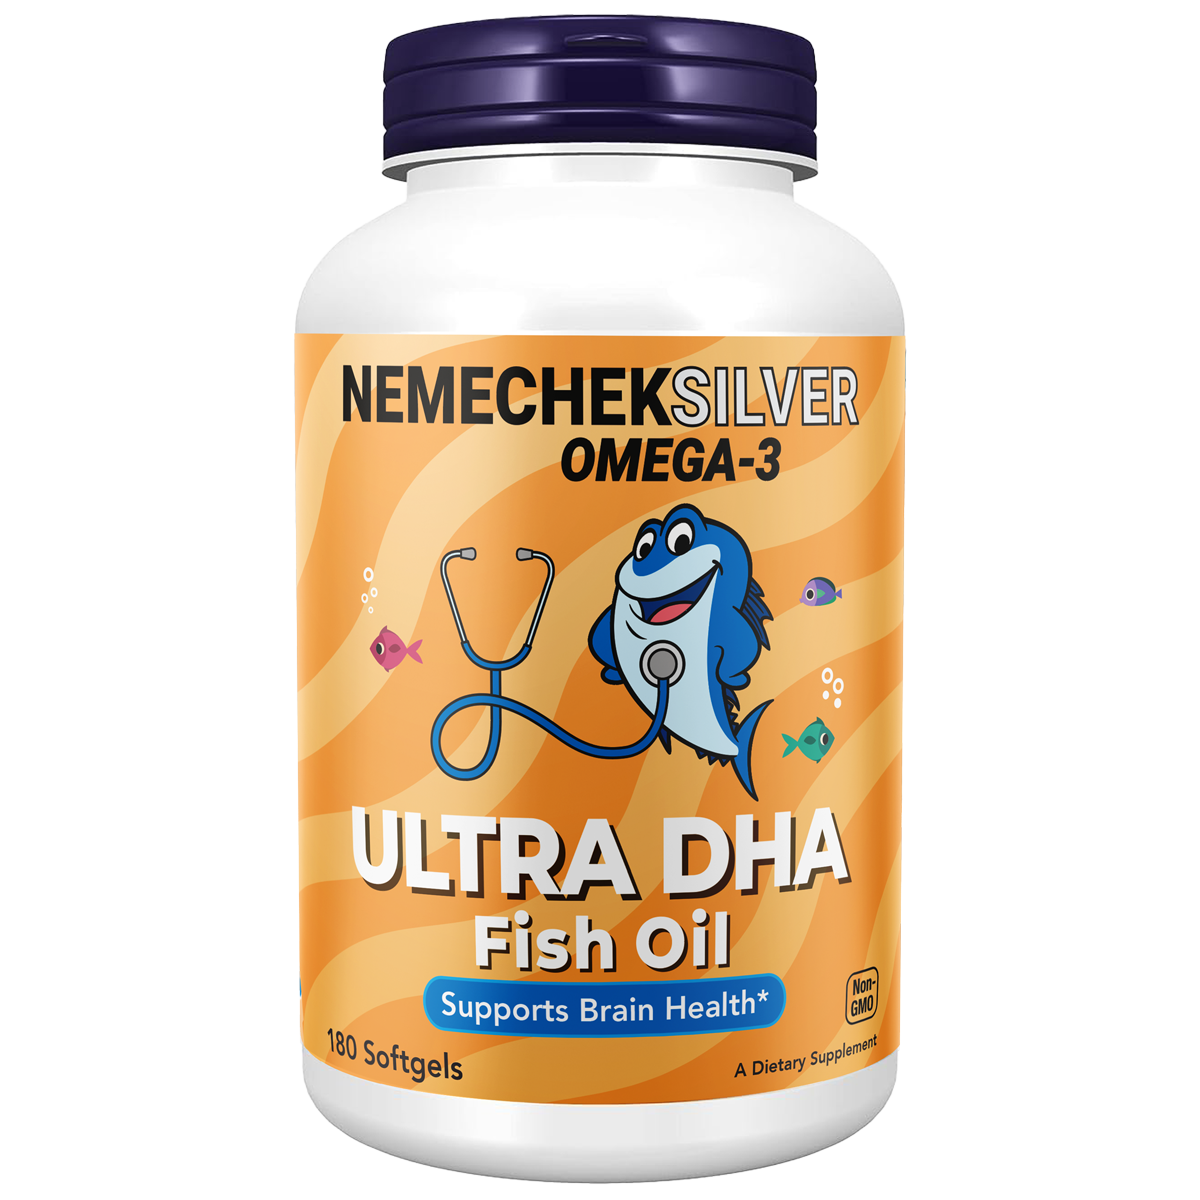 Nemechek Silver ULTRA DHA Fish Oil, Capsules (Coming Soon)